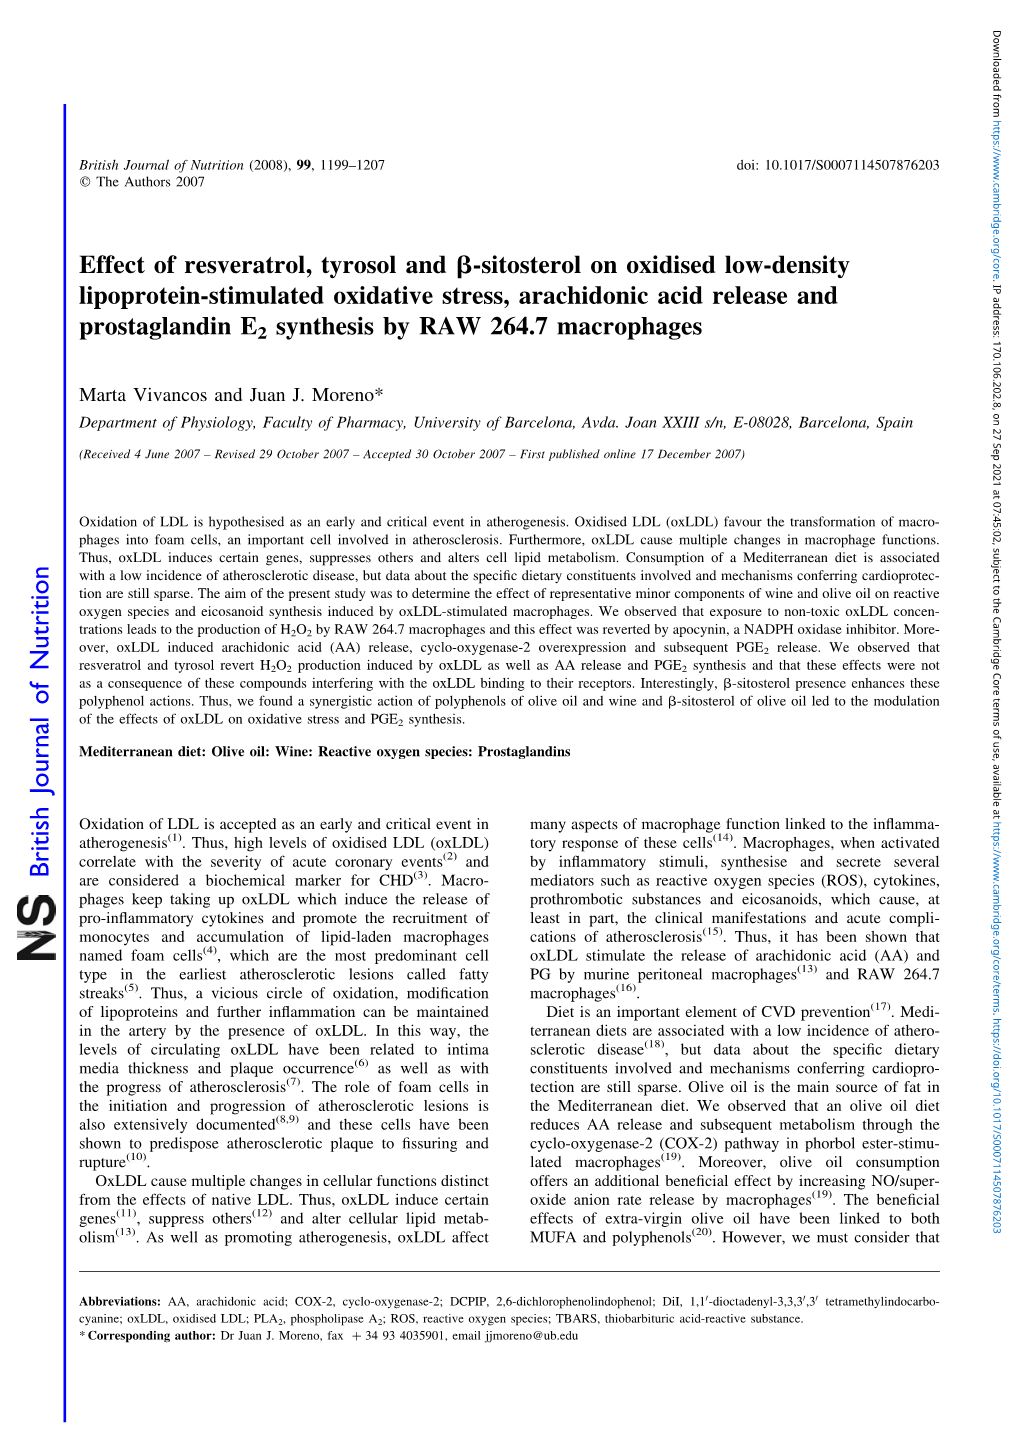 Effect of Resveratrol, Tyrosol and Β-Sitosterol on Oxidised Low-Density Lipoprotein-Stimulated Oxidative Stress, Arachidonic Ac